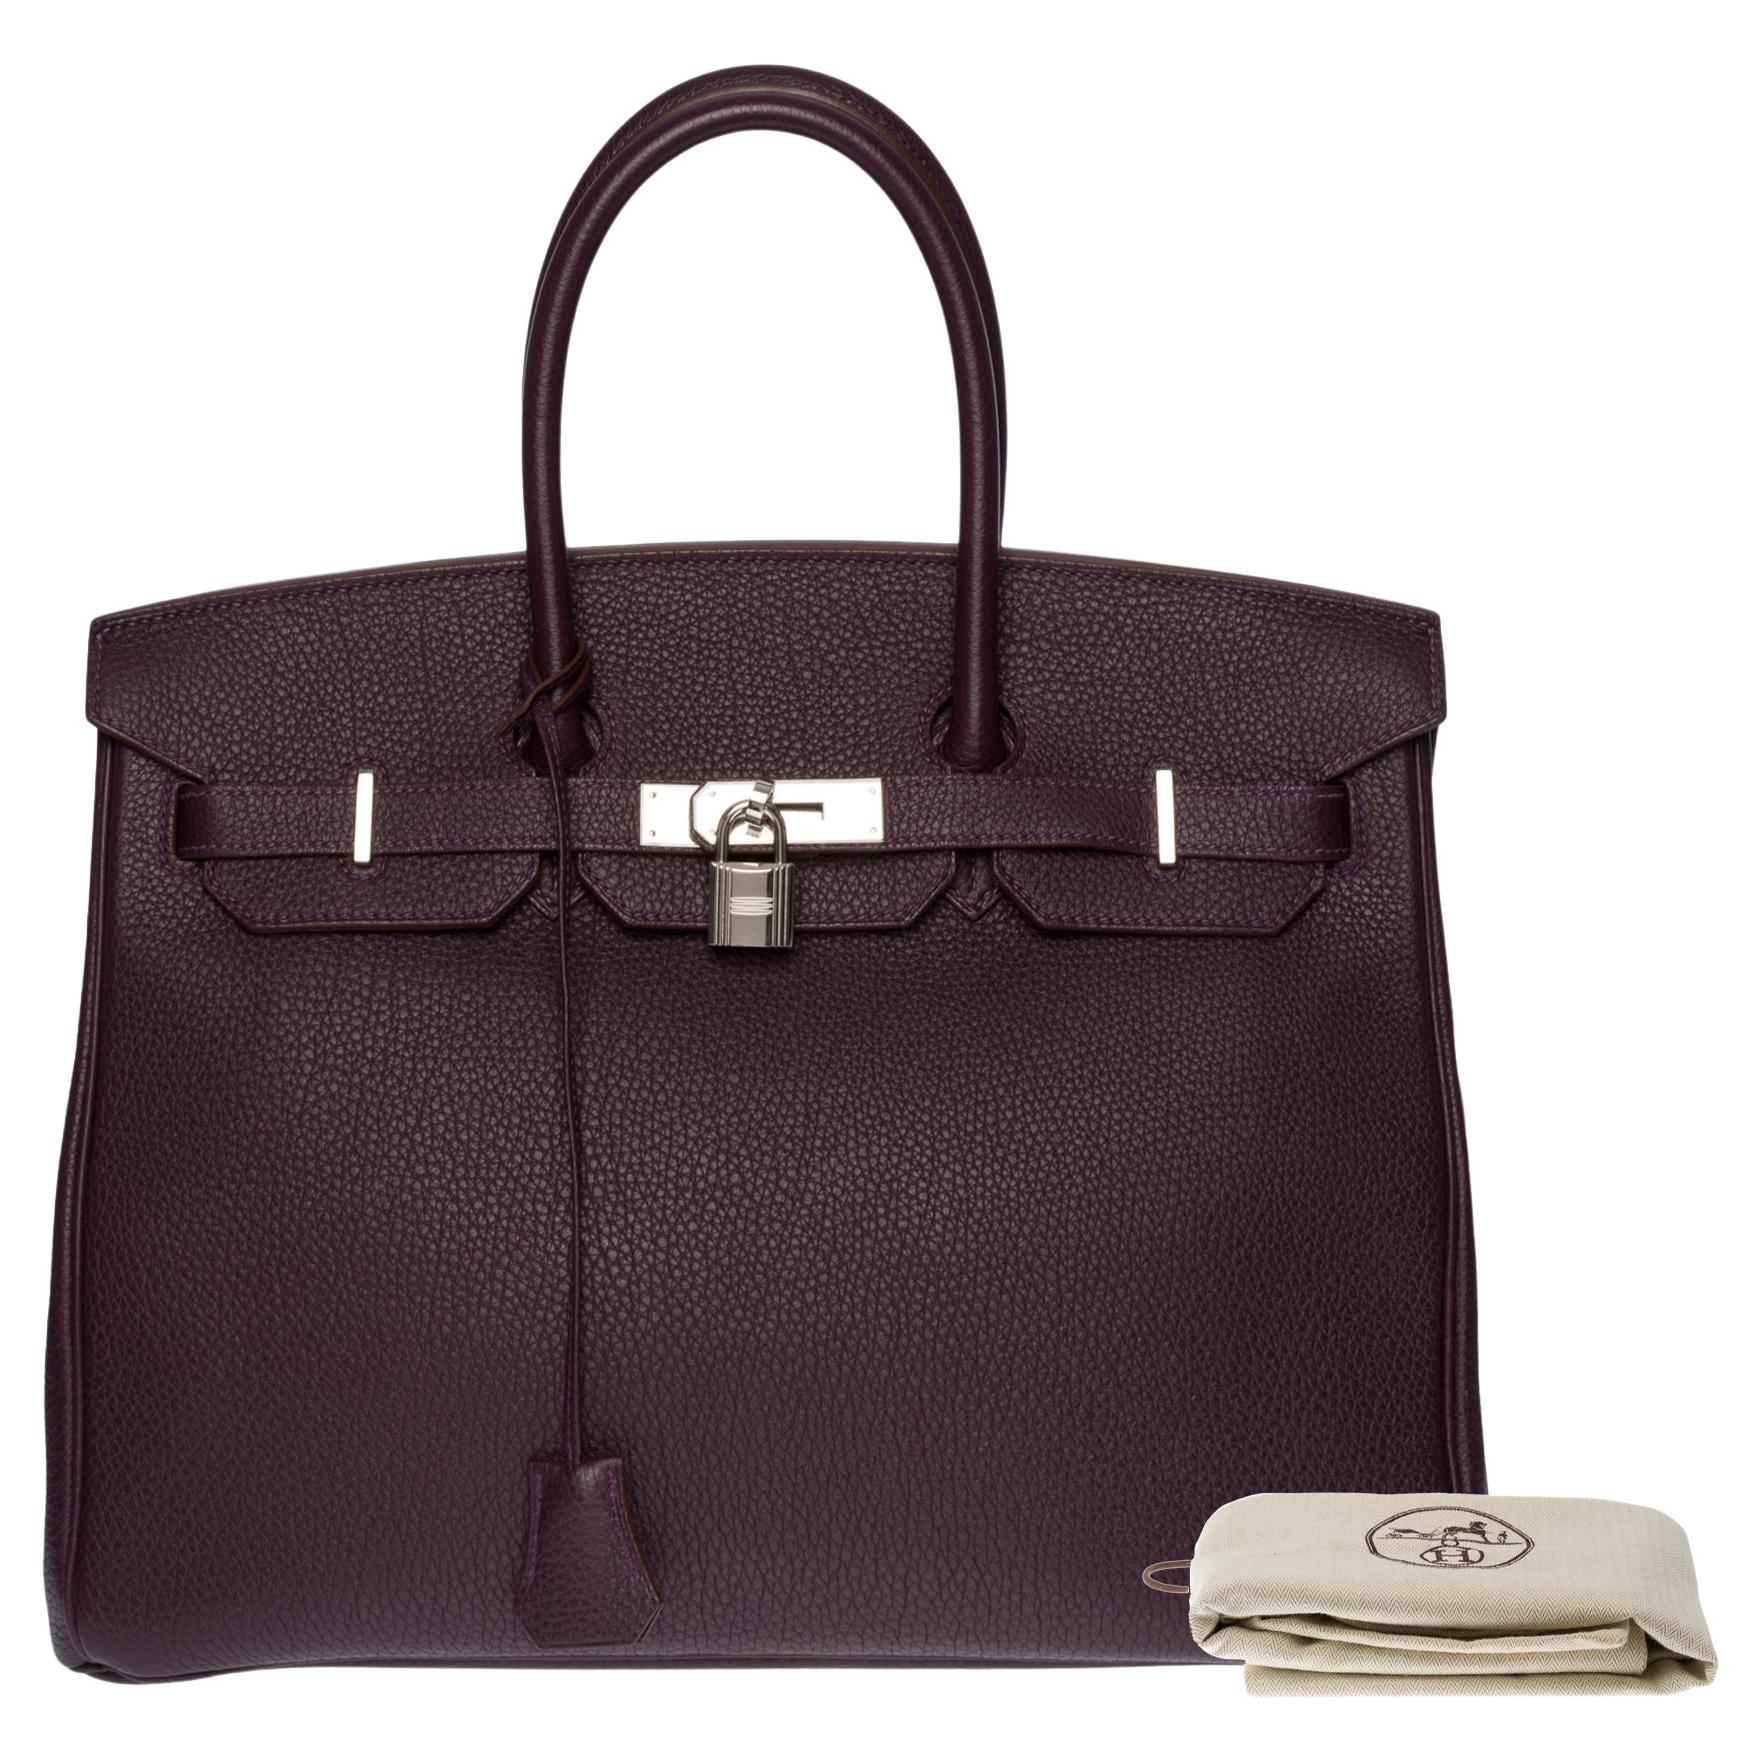 Amazing Hermès Birkin 35 handbag in raisin Togo leather, SHW